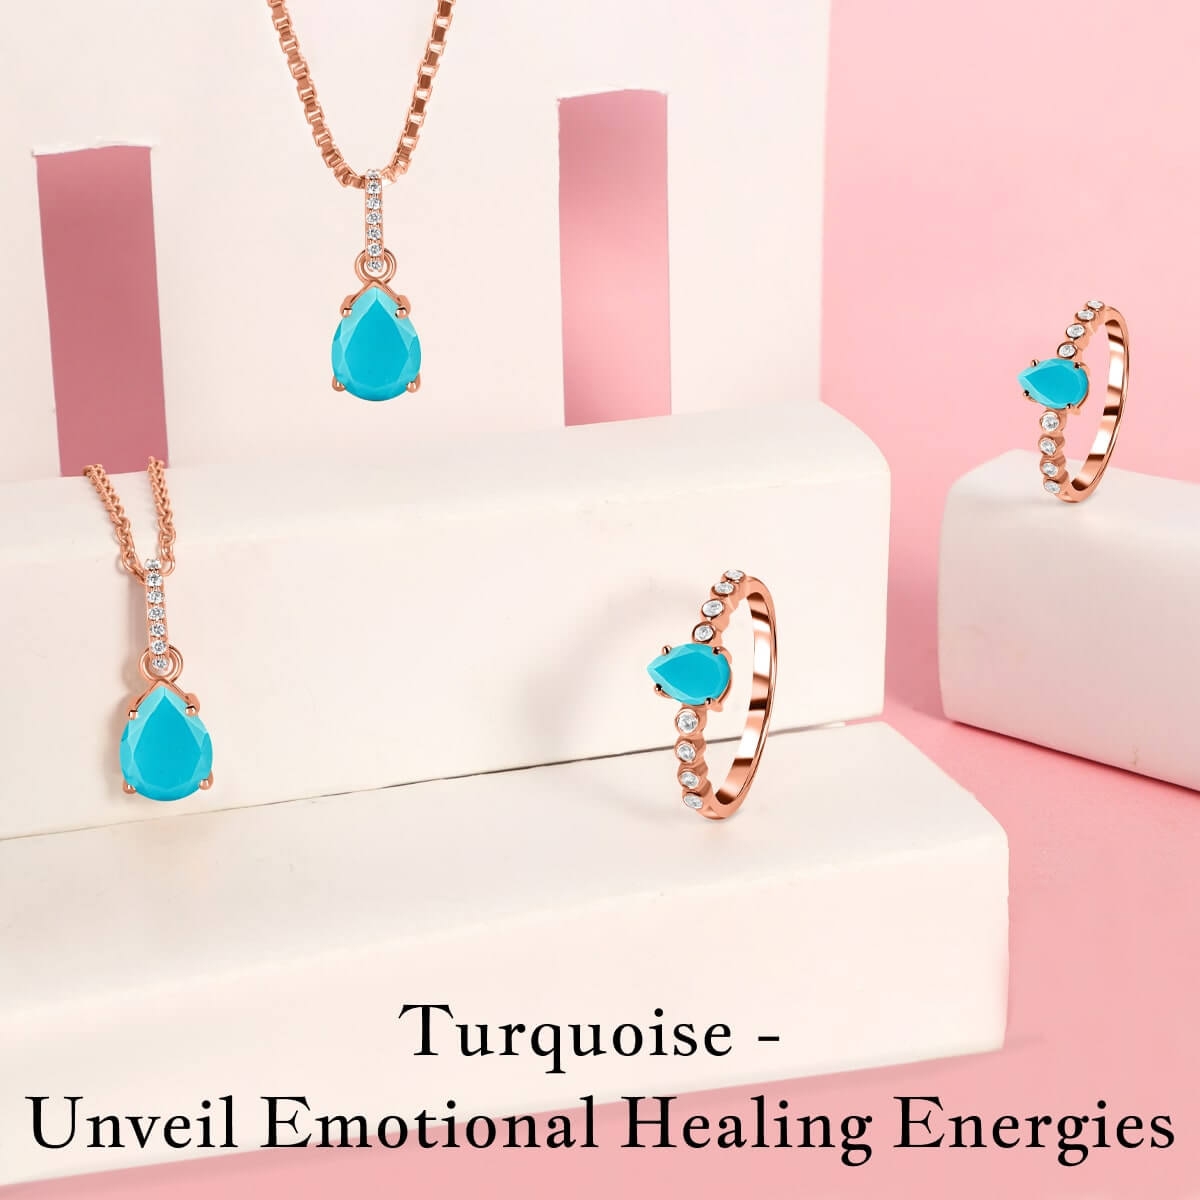 Turquoise Stone Emotional Healing Properties